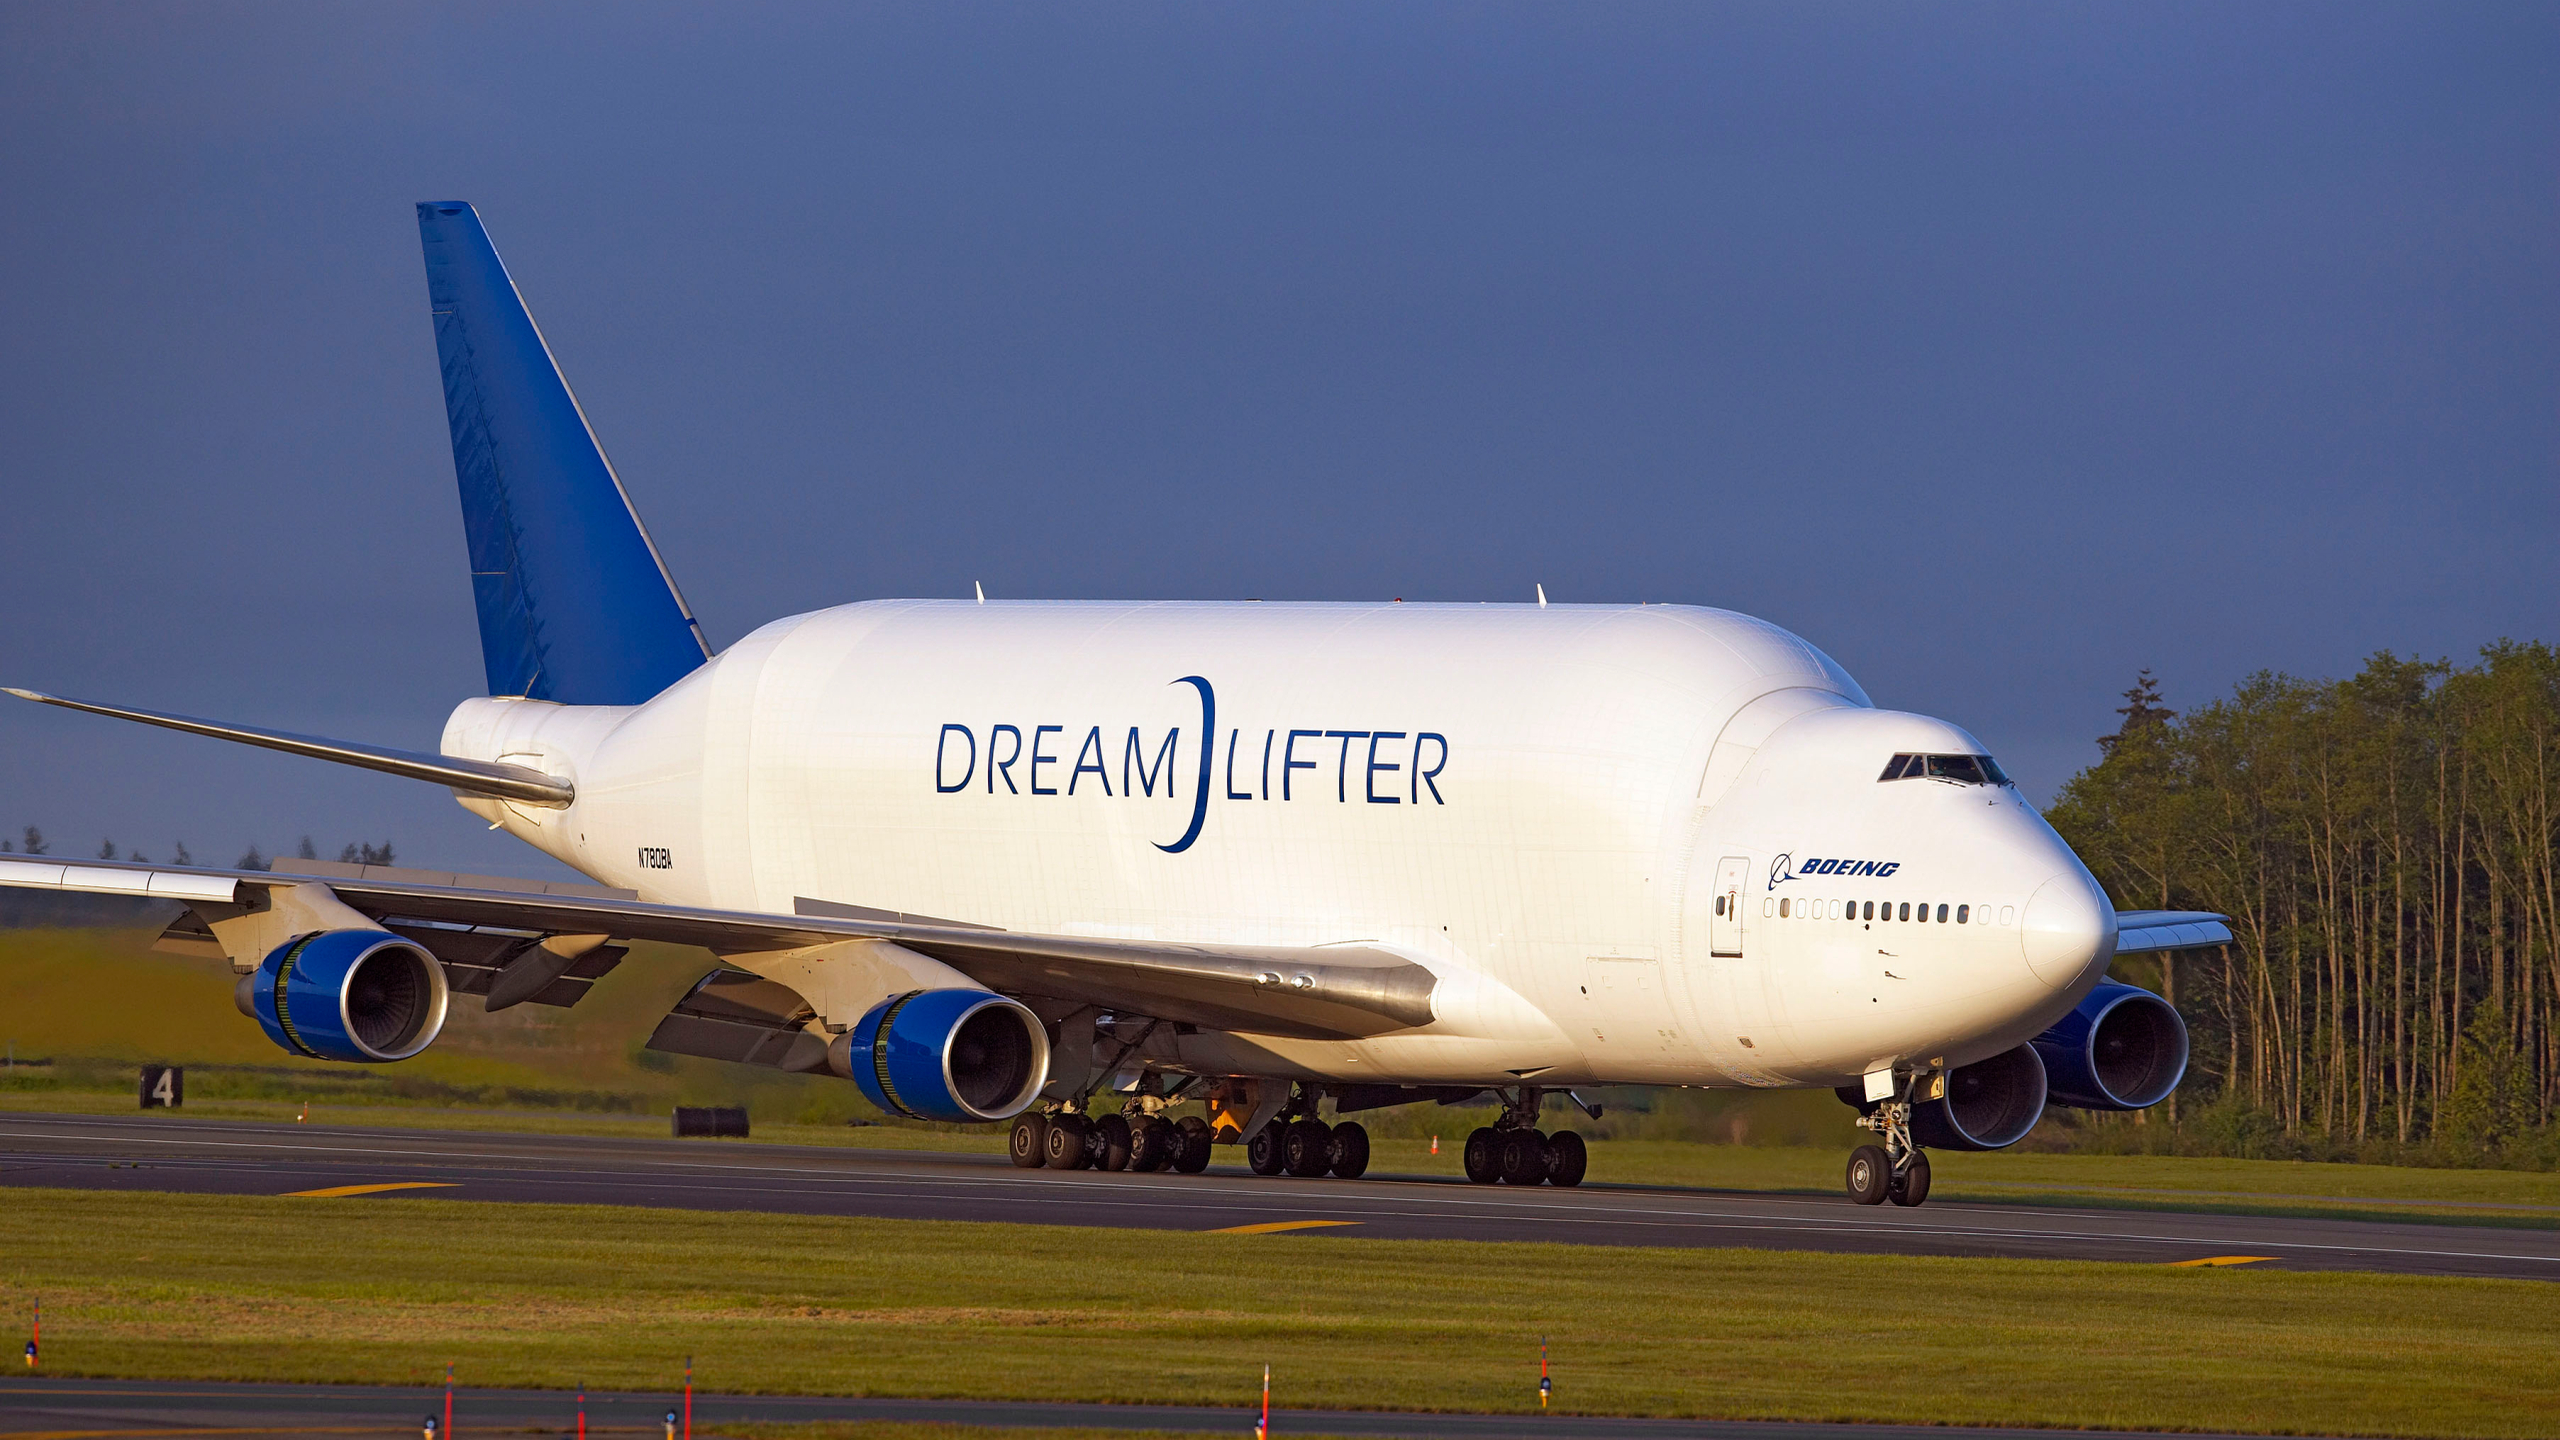 boeing 747 dreamlifter, vehicles, airplane, boeing, dreamlifter, aircraft